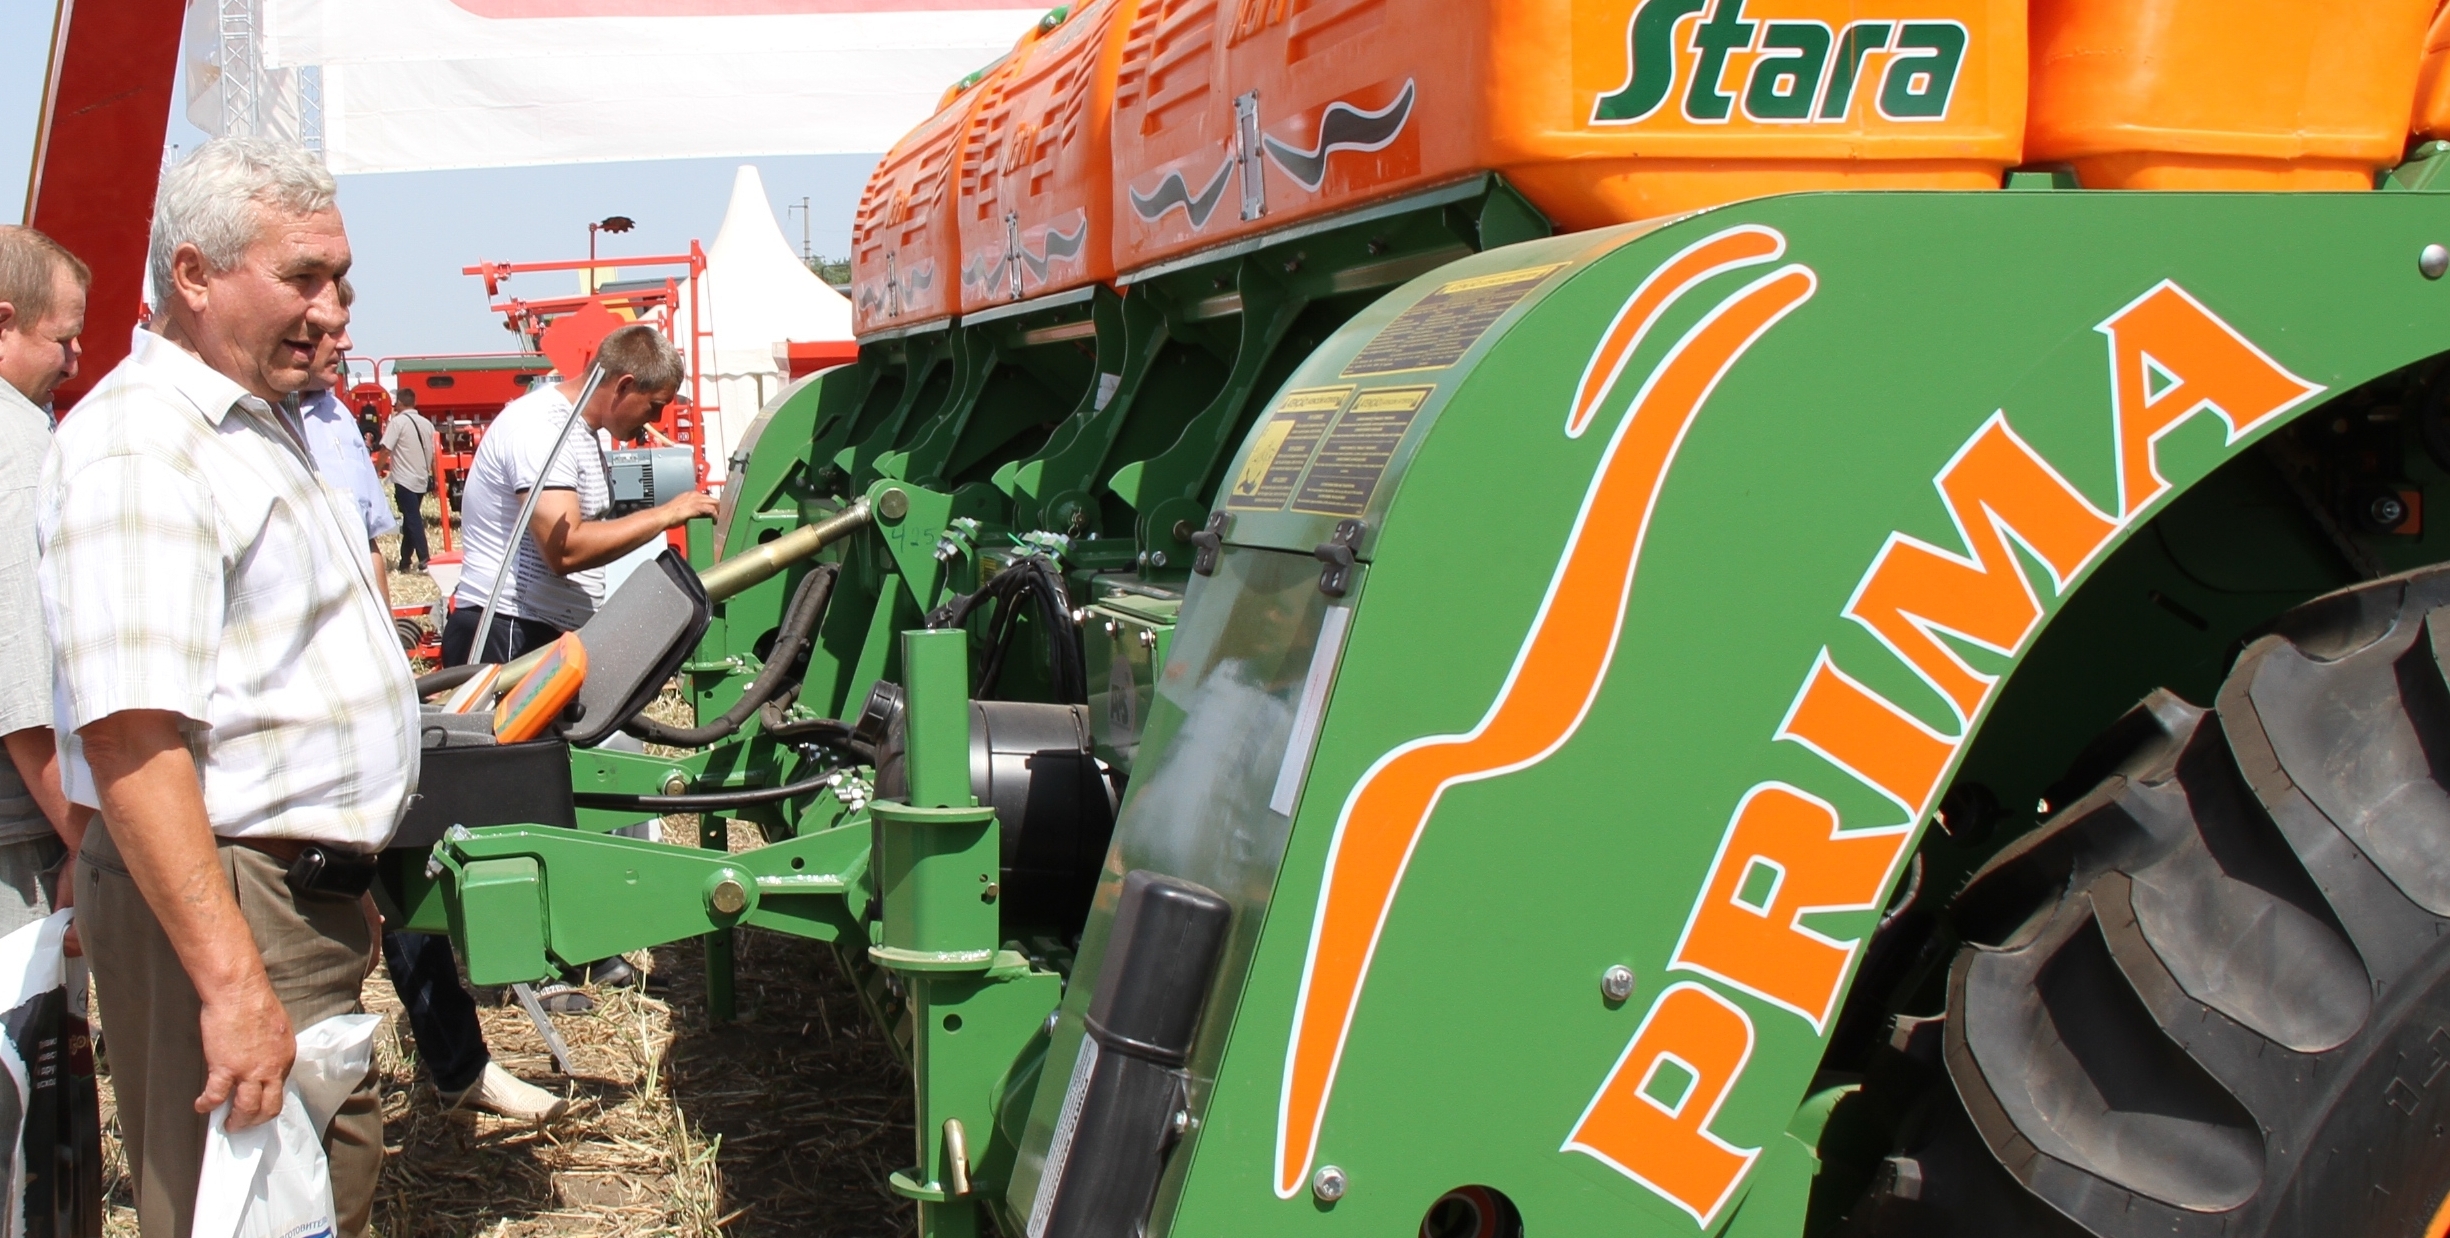 “Bizon” represents innovative Brazilian farm machinery